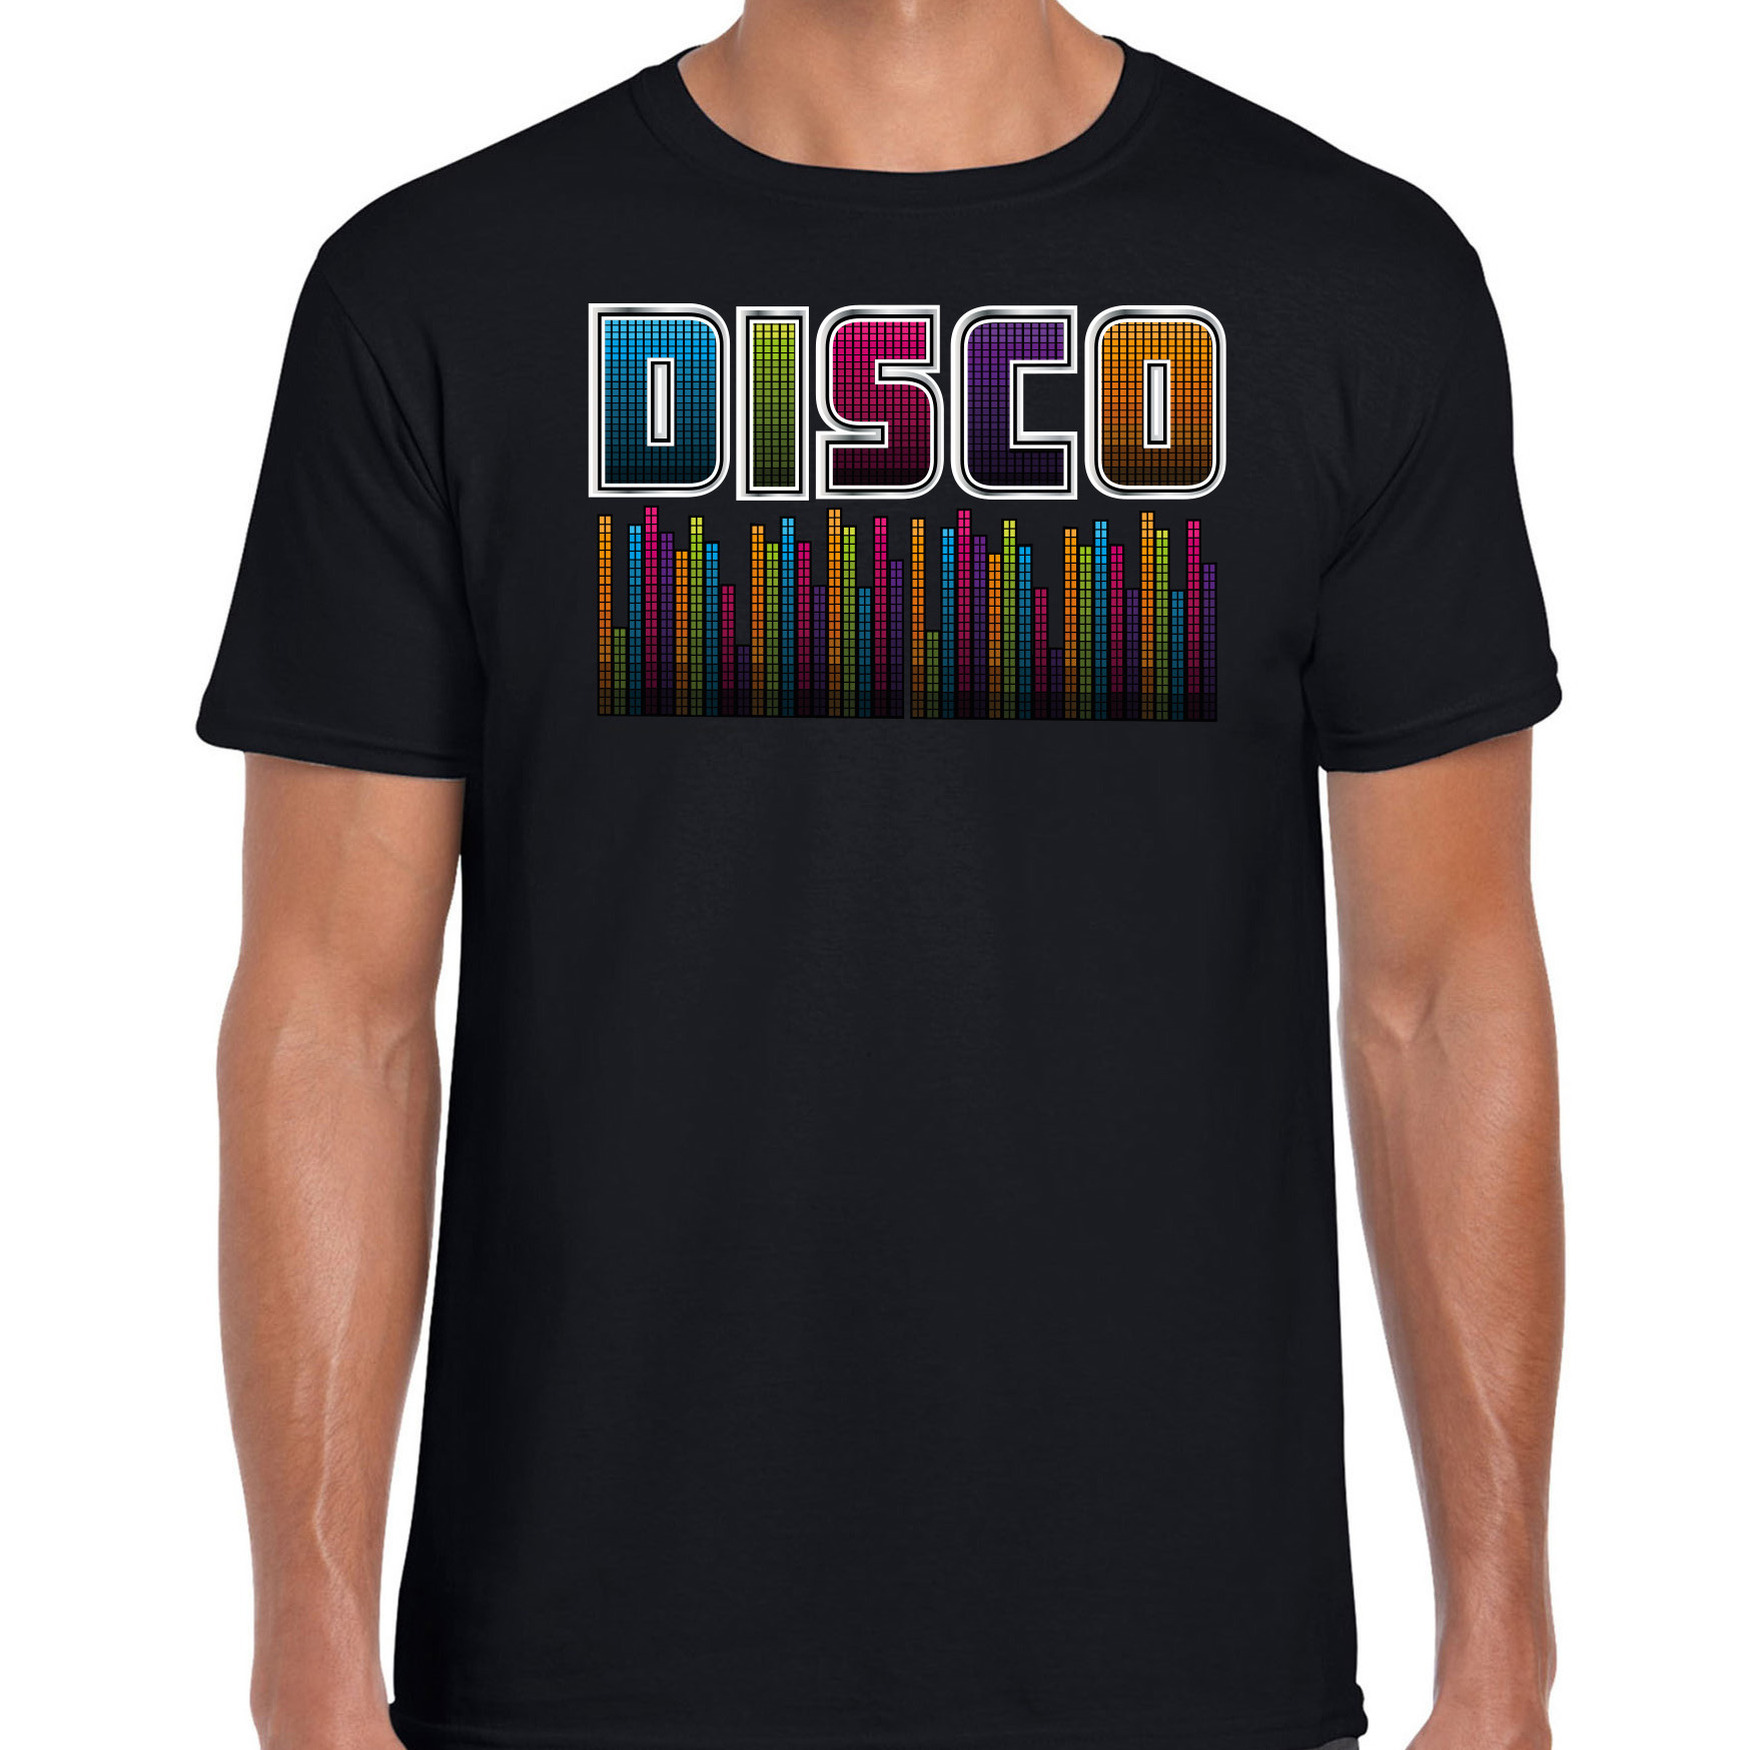 Disco verkleed t-shirt heren jaren 80 feest outfit disco muziek zwart